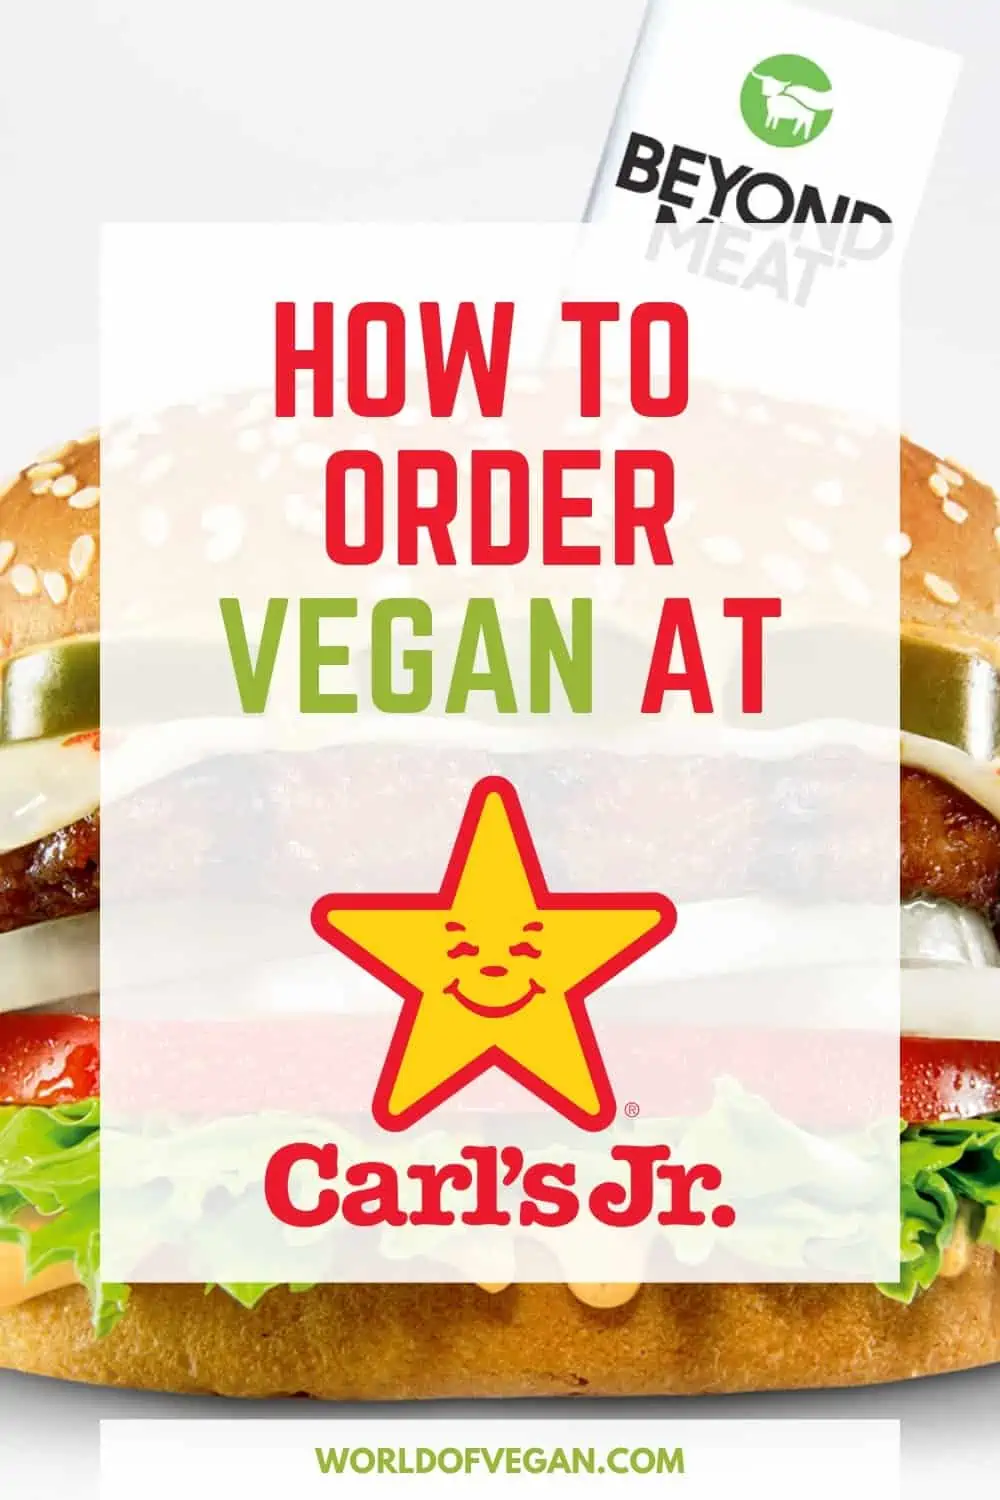 How to Order a Vegan Burger at Carl's Jr.